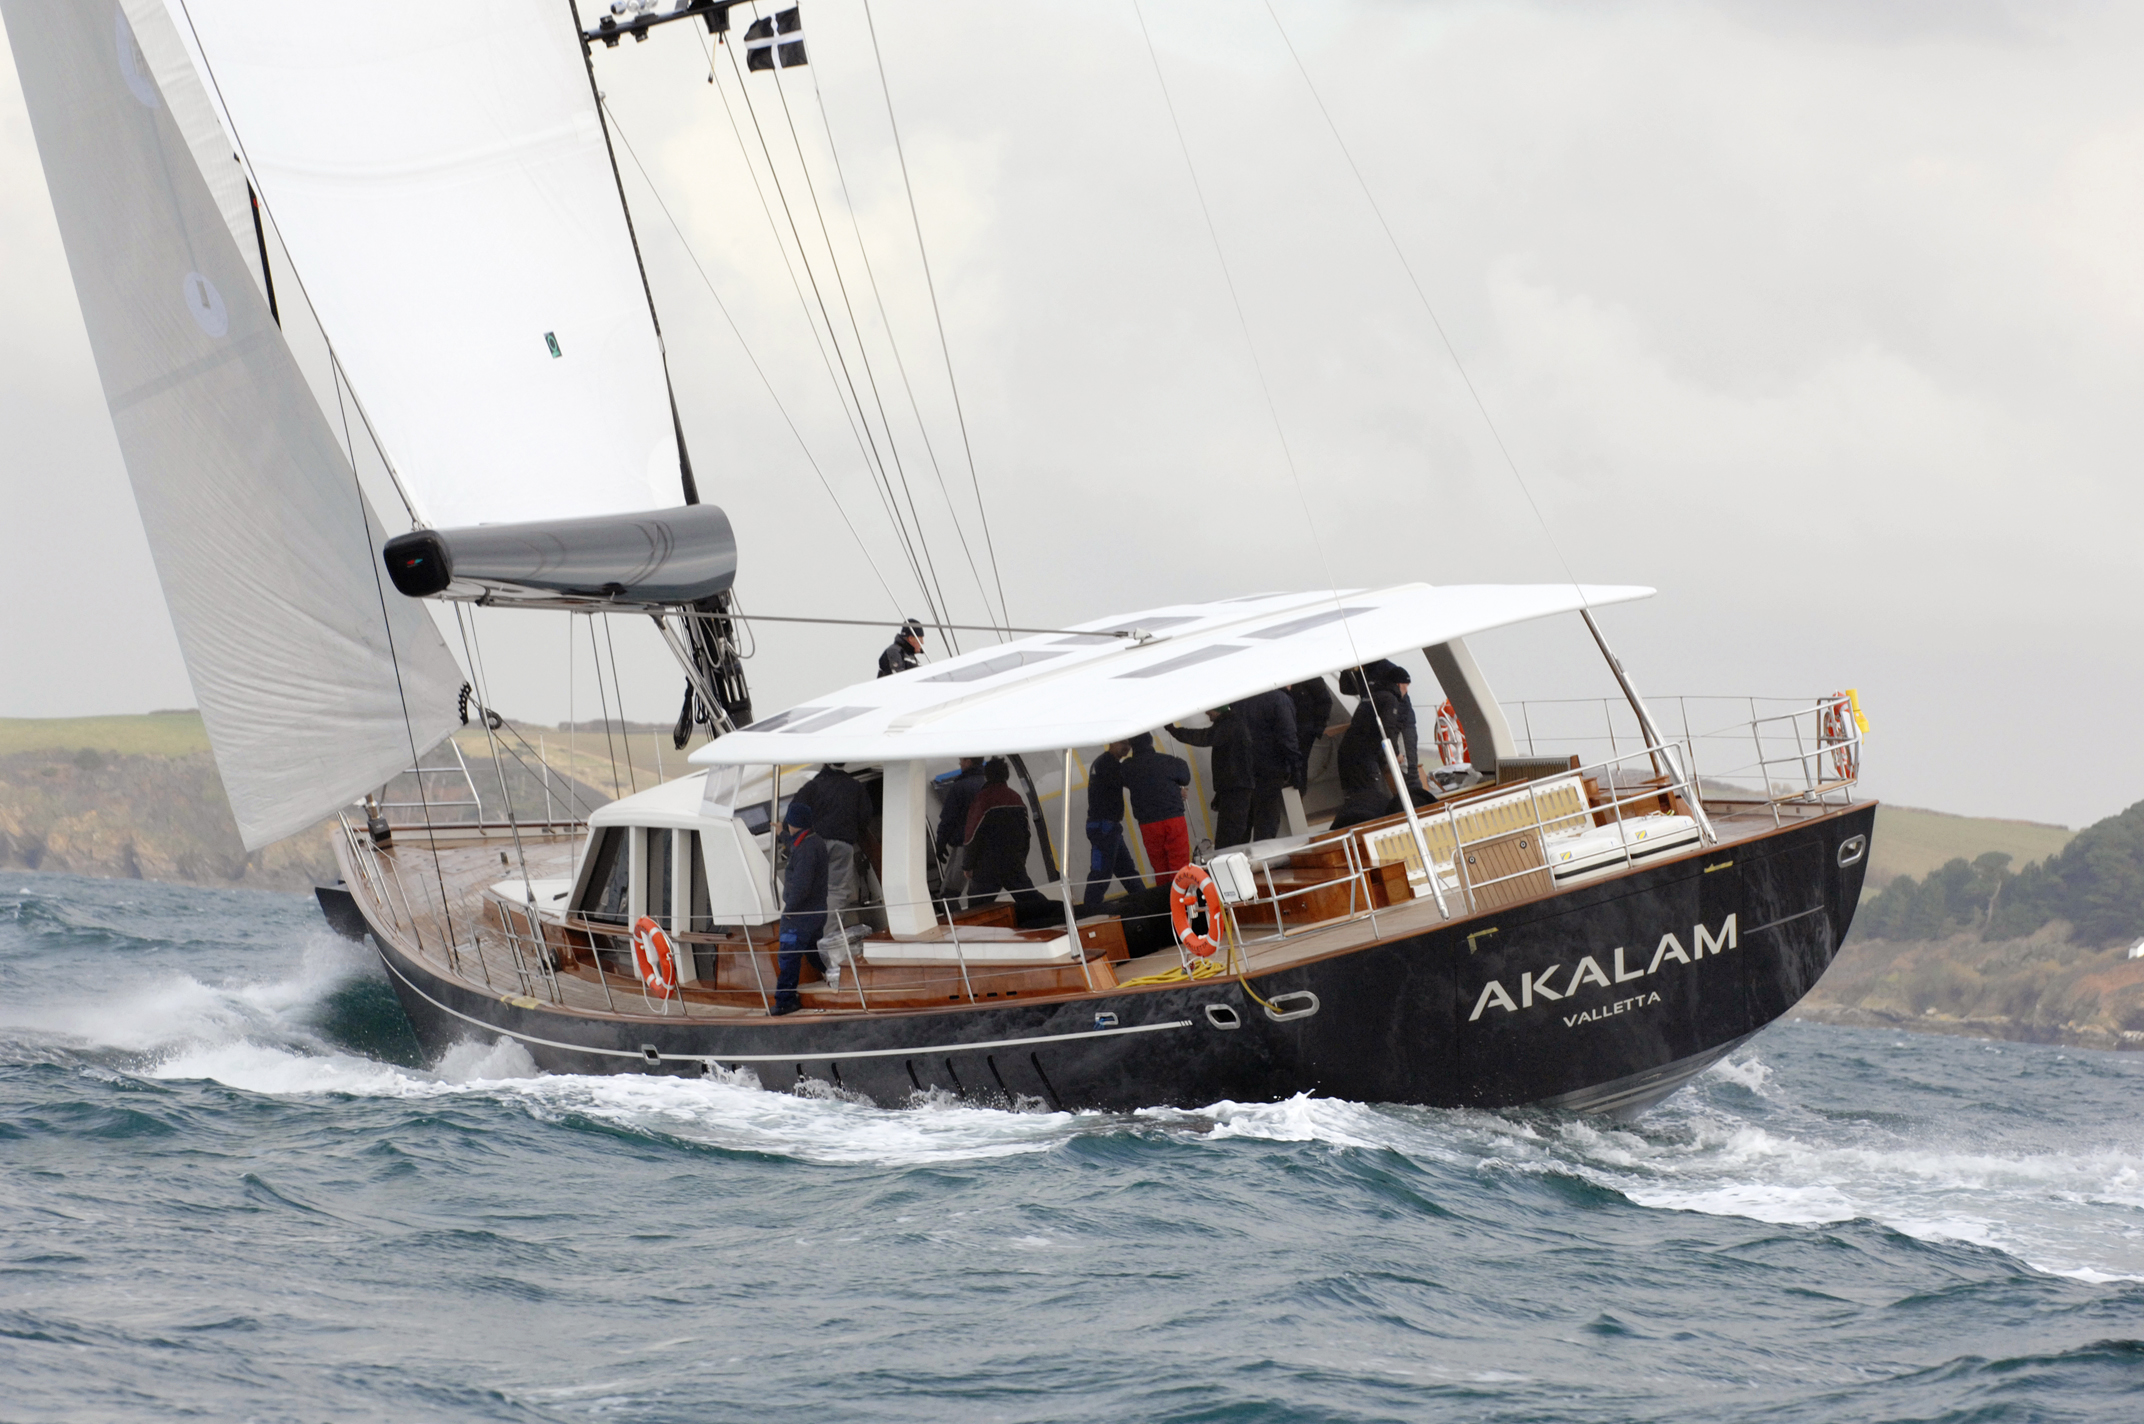 32 metre sailing yacht